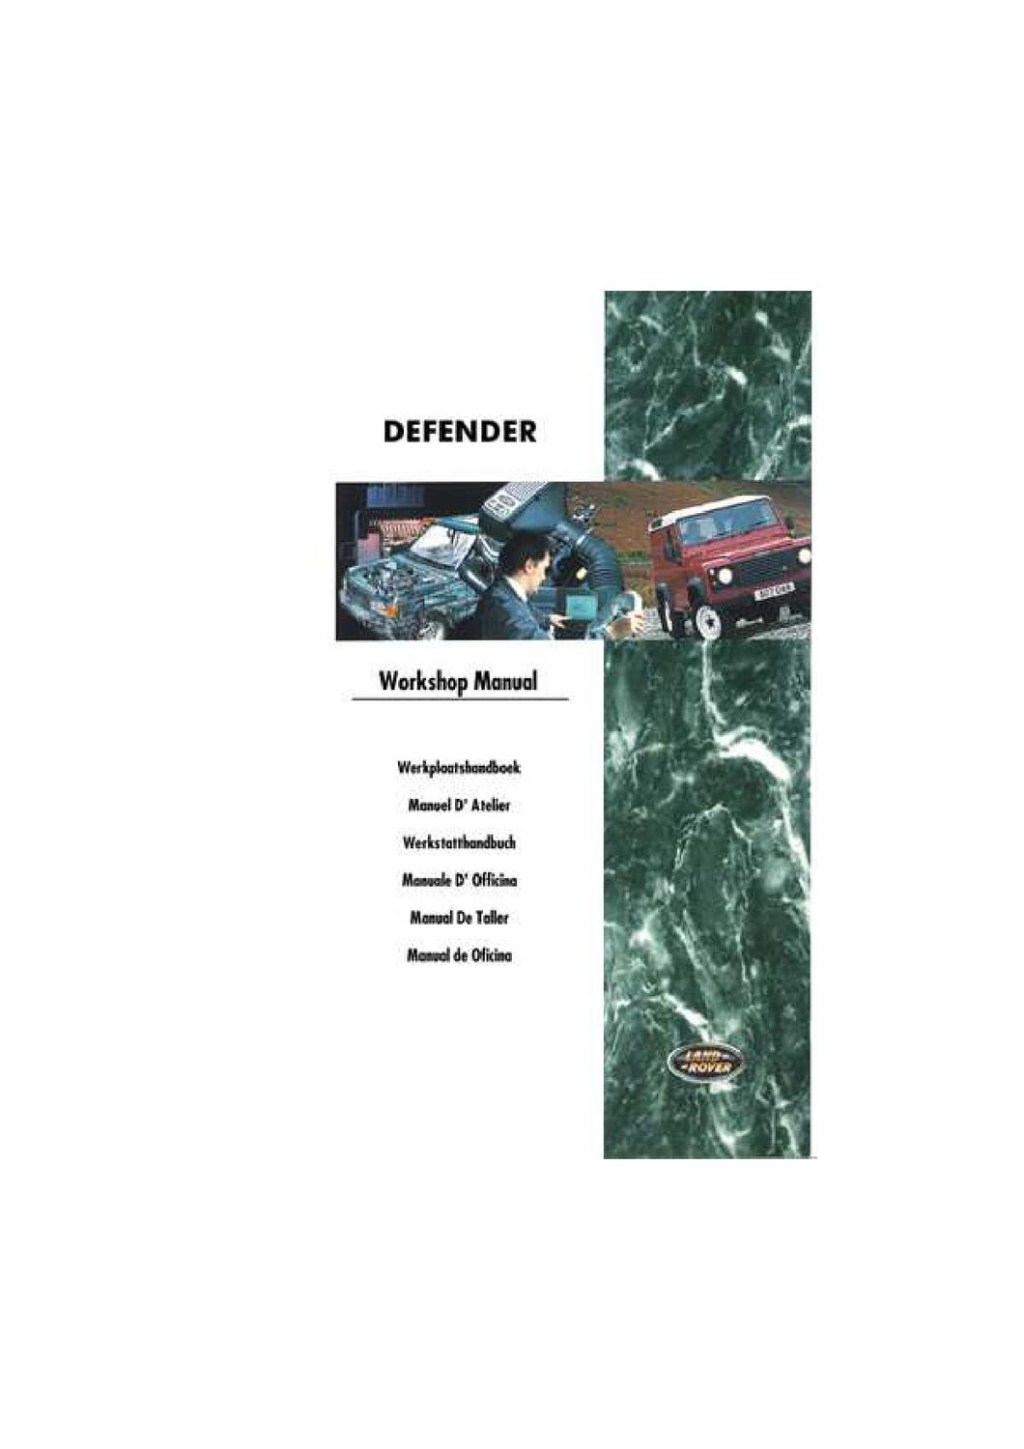 Picture of: Tdi Land Rover Defender Workshop Manual by Anton Carakoom – Issuu